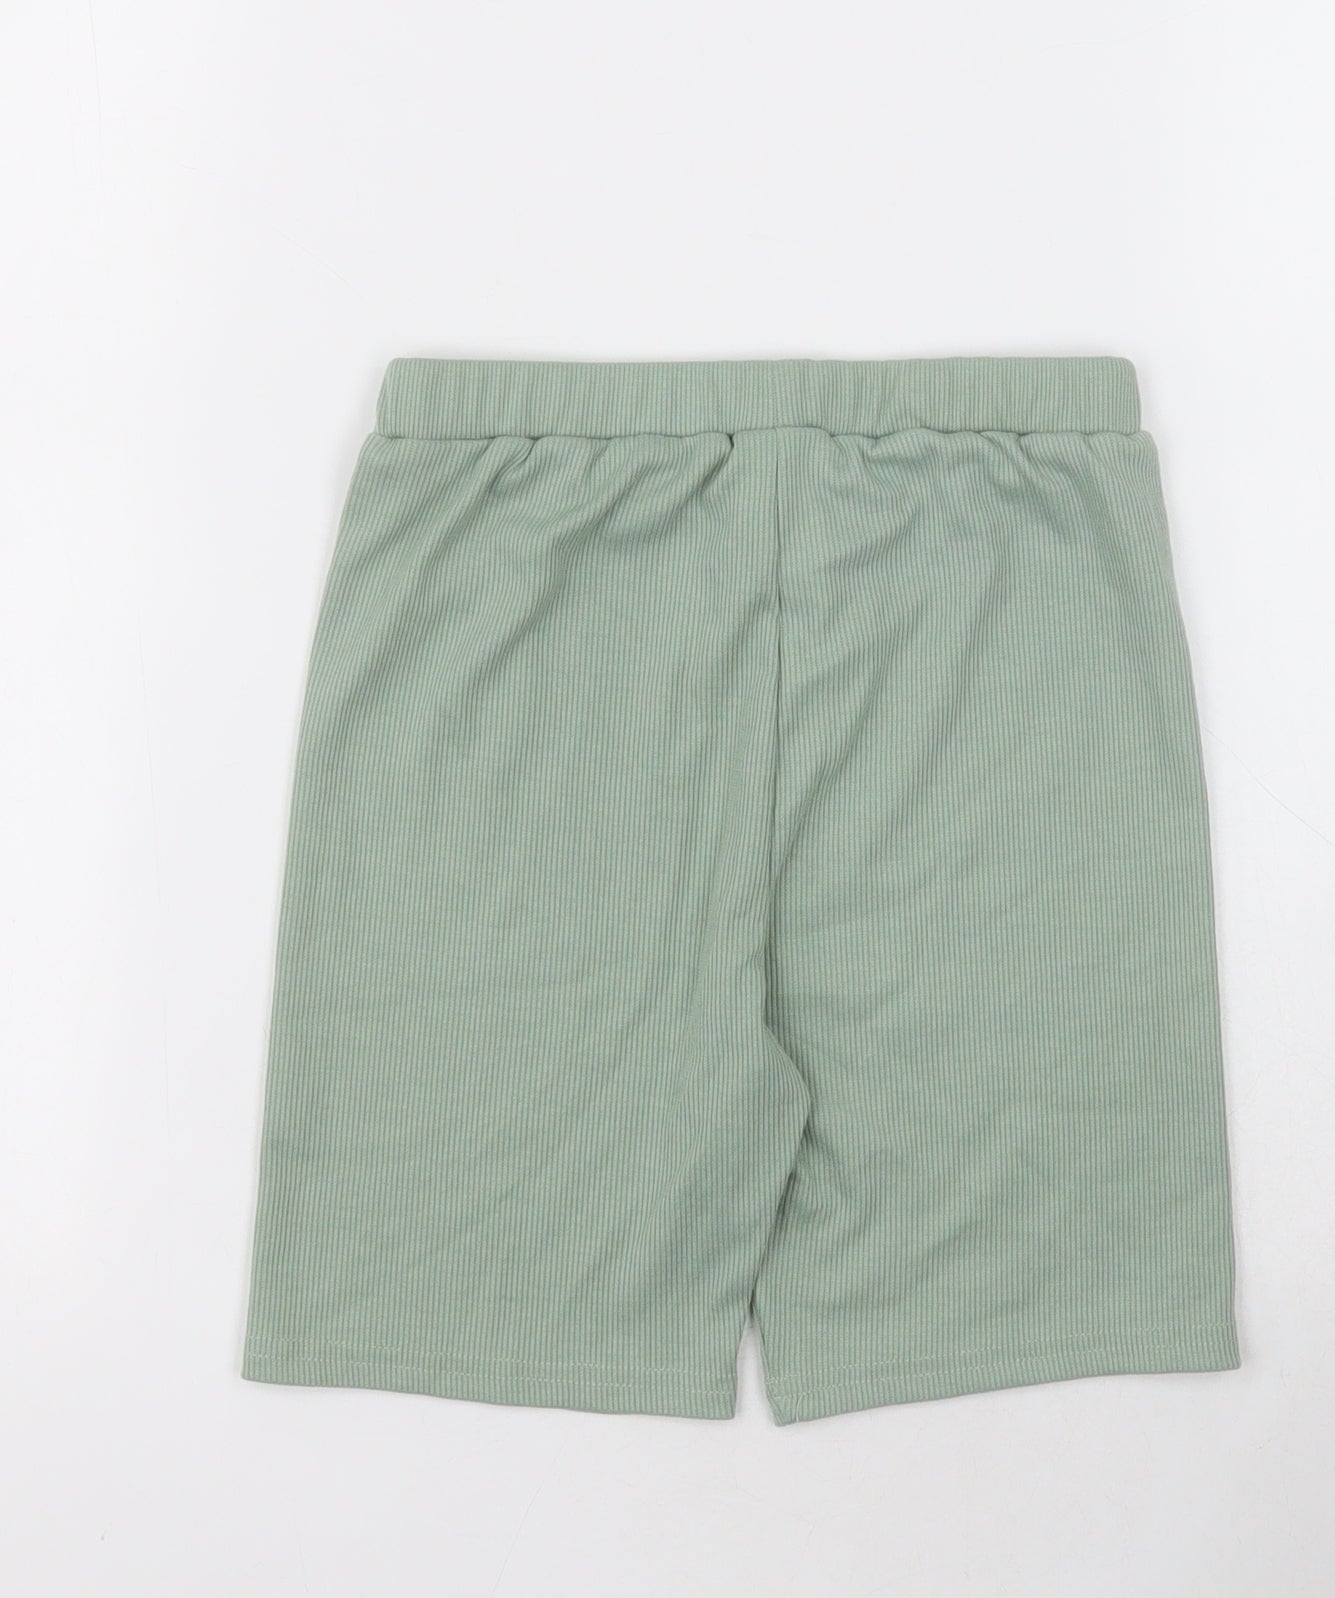 SheIn Girls Green  Polyester Sweat Shorts Size 10 Years  Regular